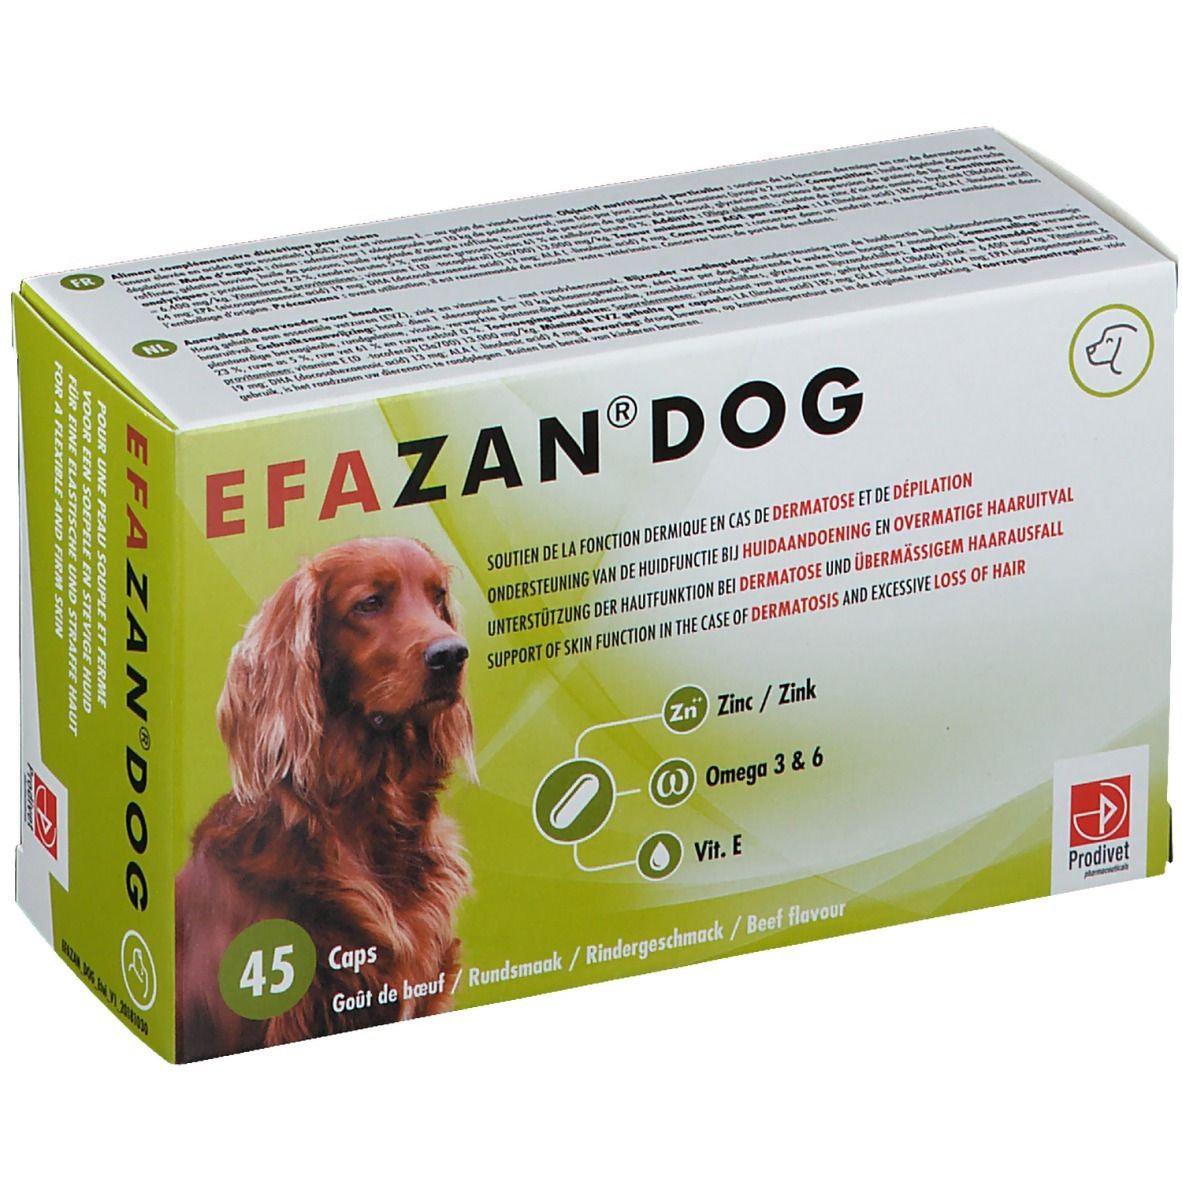 EFAZAN® DOG